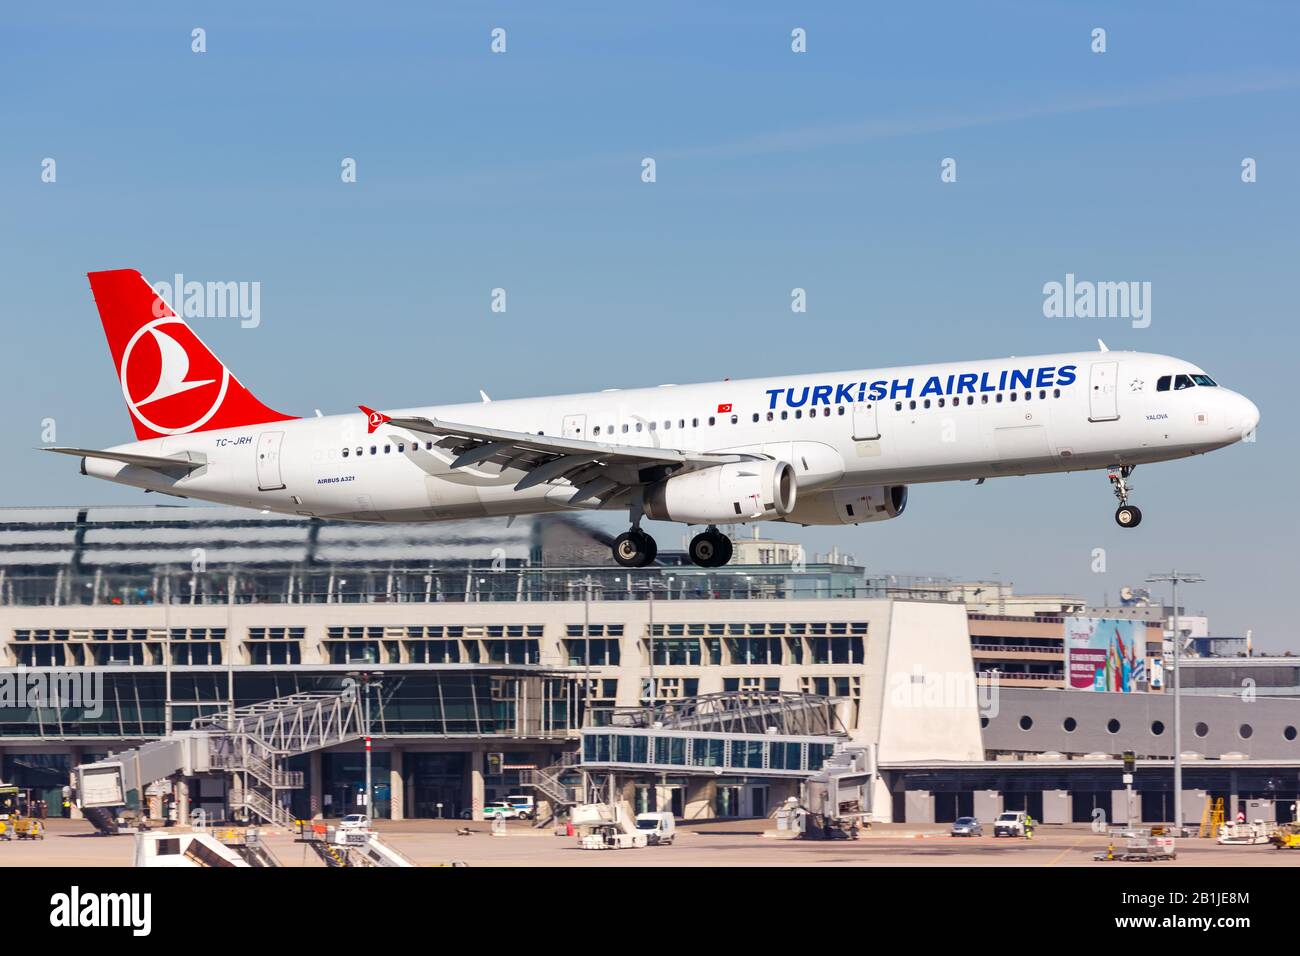 Stuttgart, Germany – March 21, 2019: Turkish Airlines Airbus A321 airplane at Stuttgart Airport (STR) in Germany. Stock Photo